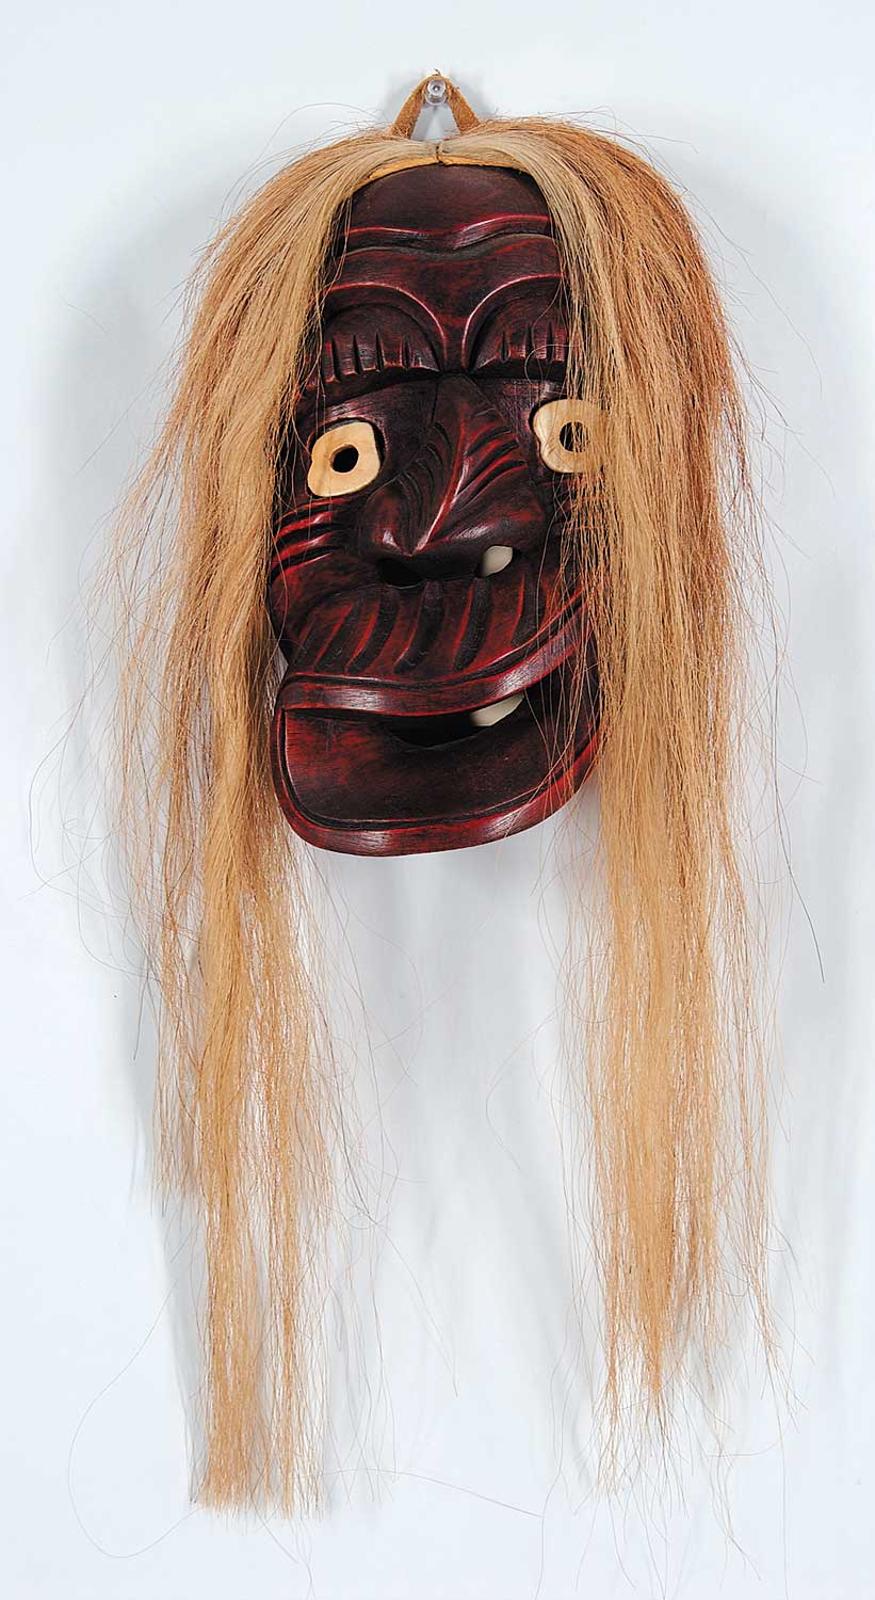 Dohan'dre Iroquois - Broken Nose Mask with Bone Eyes